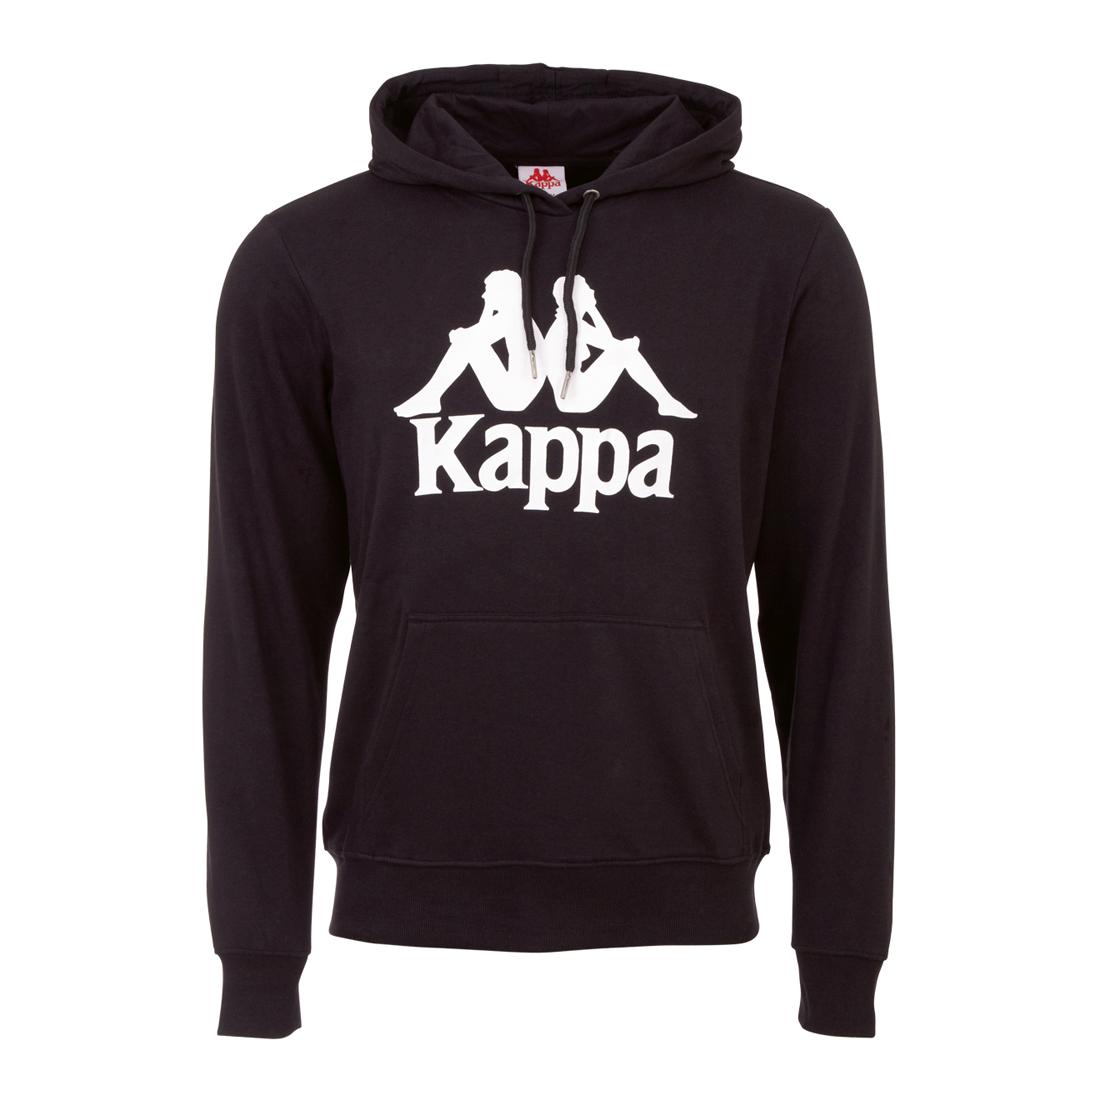 Kappa Unisex Hooded Sweatshirt Pullover Hoody 705322 Schwarz von Kappa